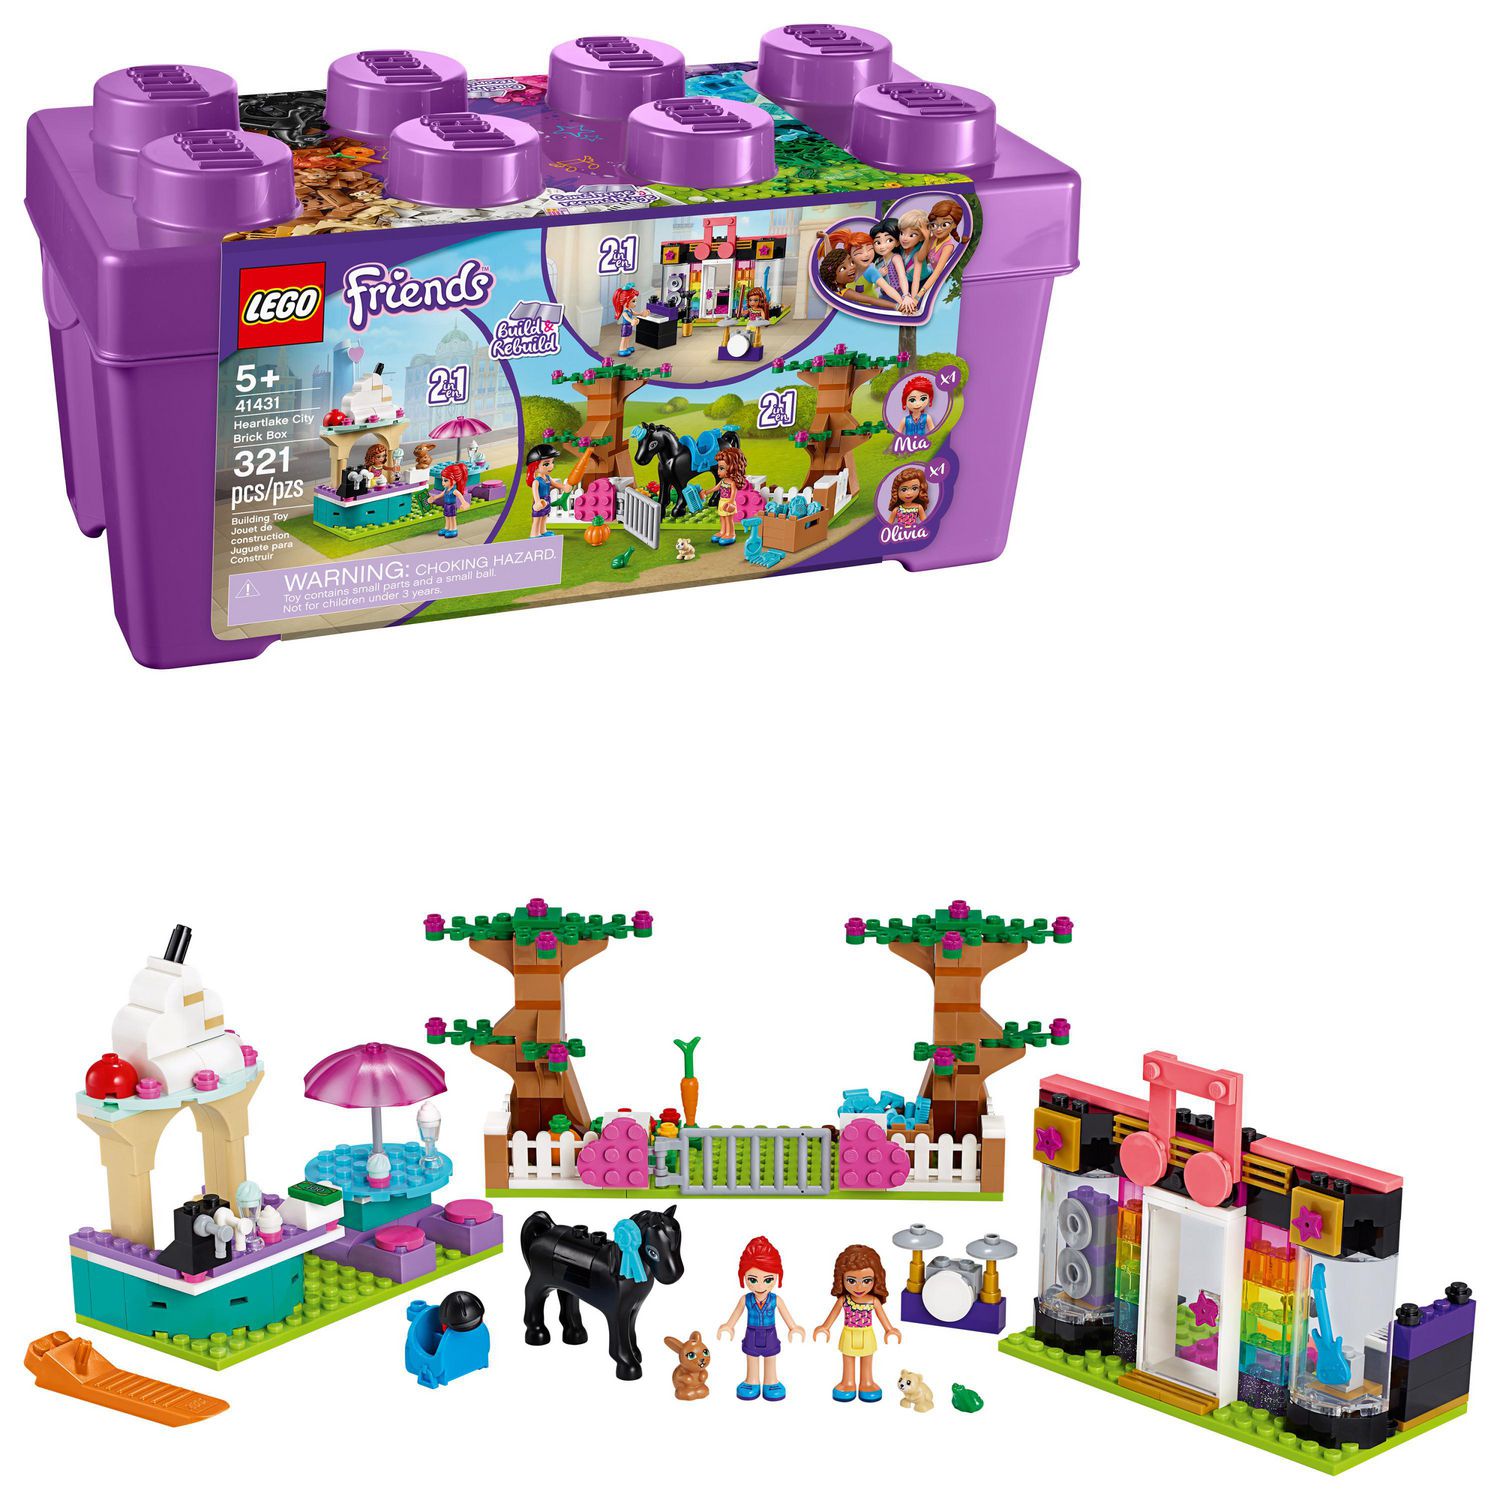 LEGO Friends Heartlake City Brick Box 41431 Toy Building Kit (321